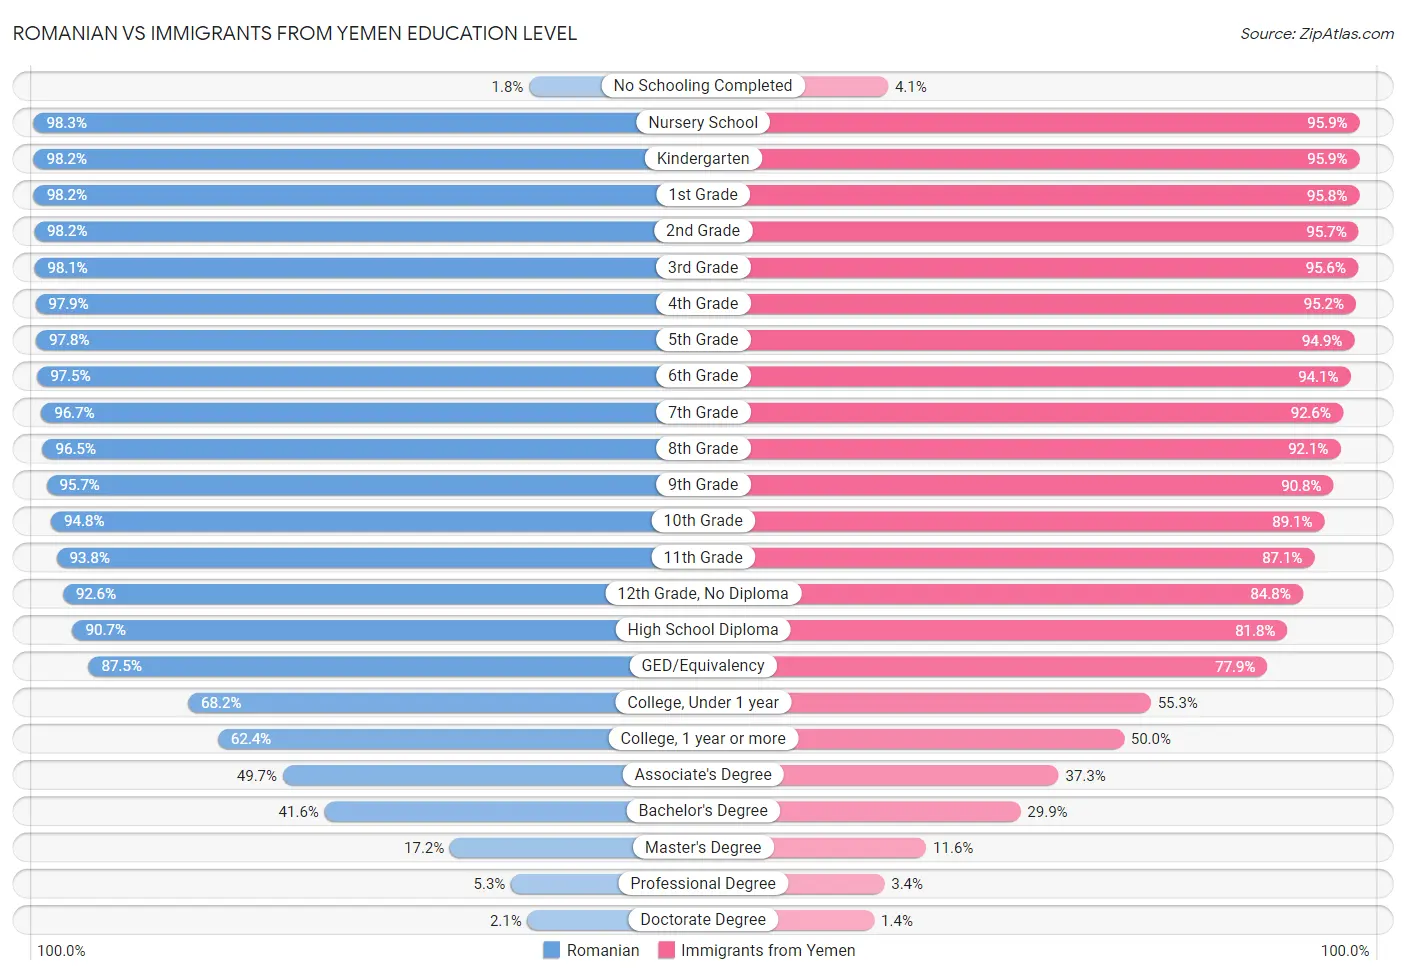 Romanian vs Immigrants from Yemen Education Level